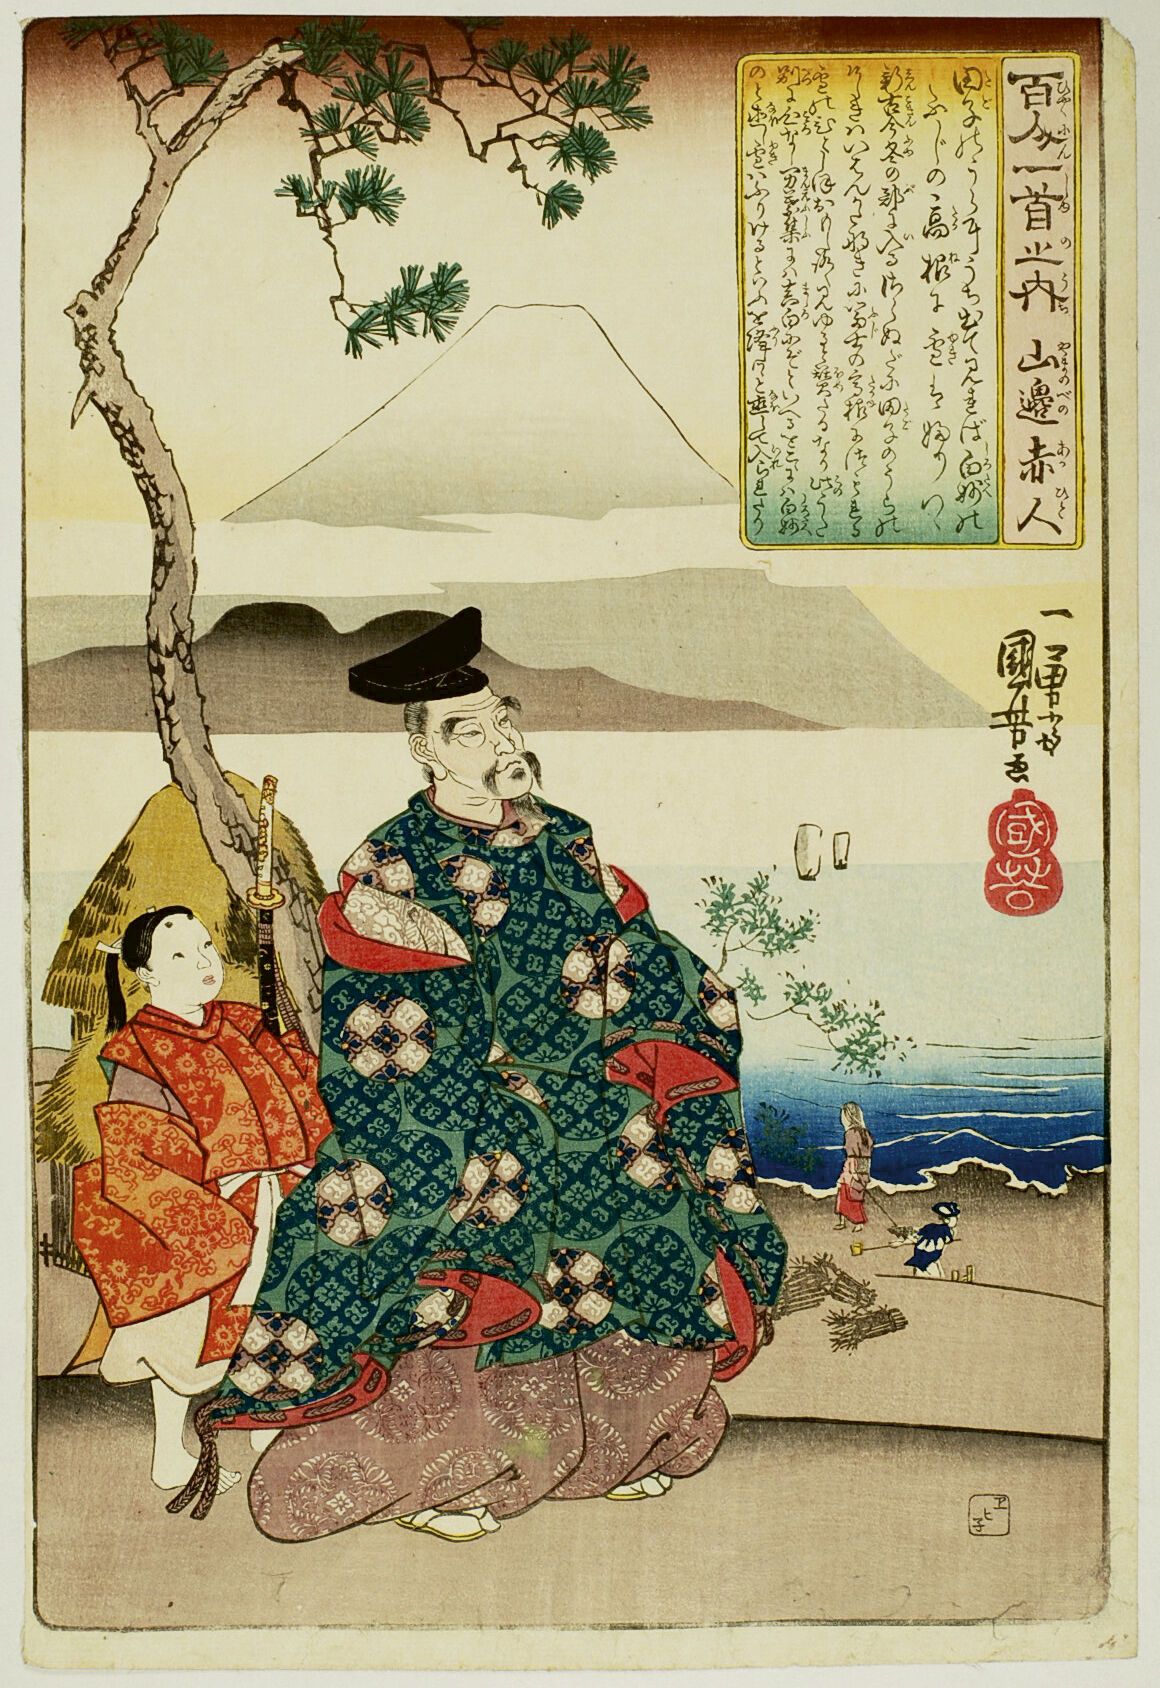 Null 宇多川国义 (1797-1861)
百人一首》系列中的 "大板"（Oban tate-e），版式为 "山边赤人"（Yamabe no Akahito）&hellip;